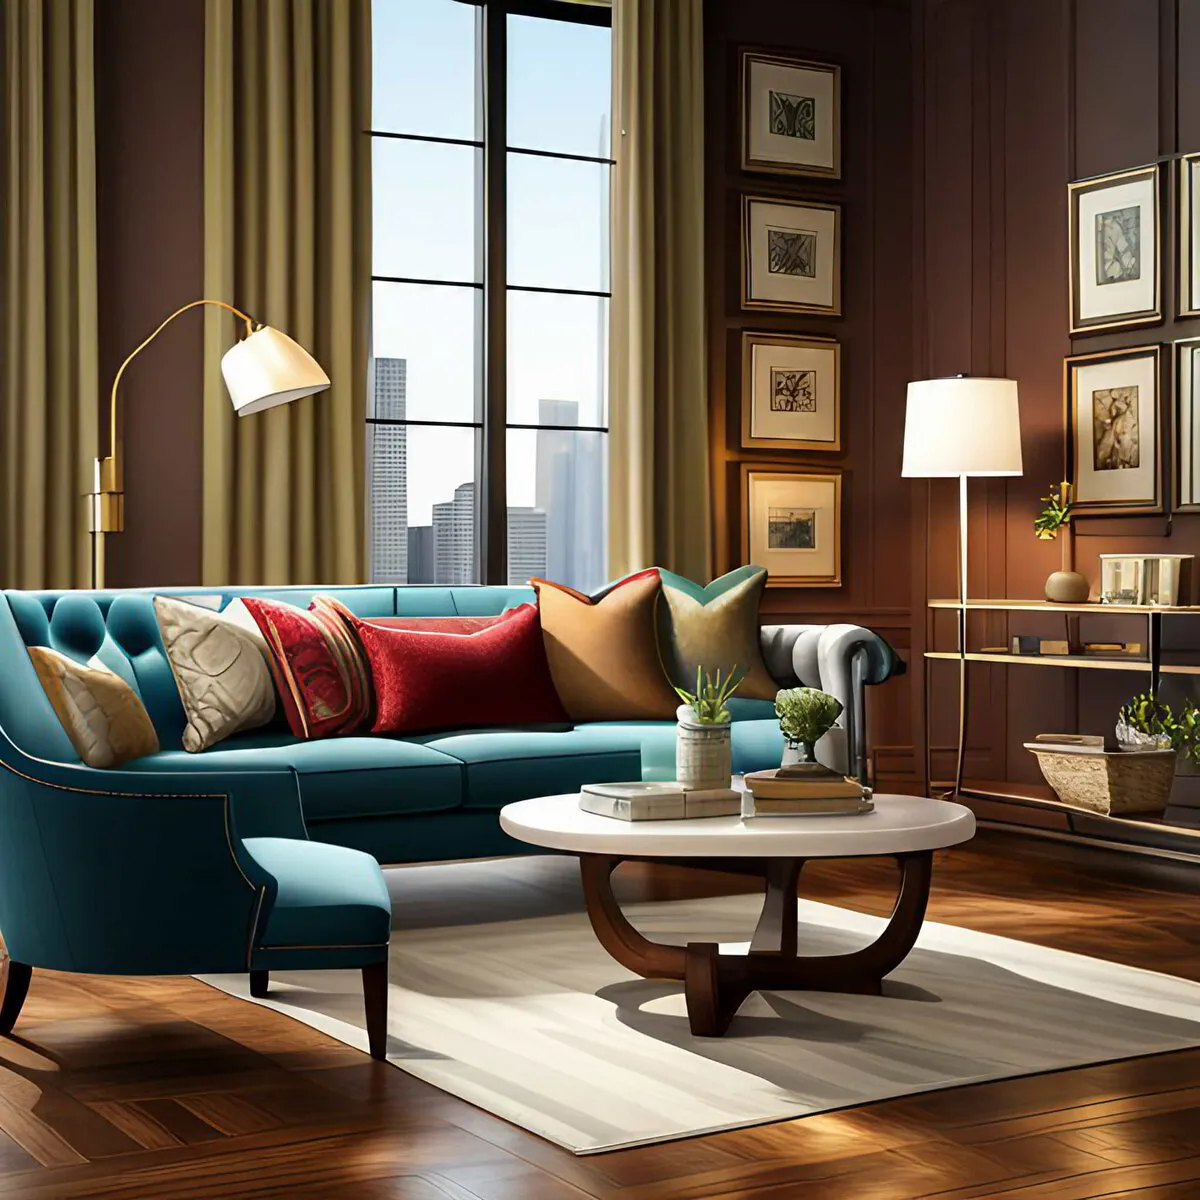 traditional designed living room